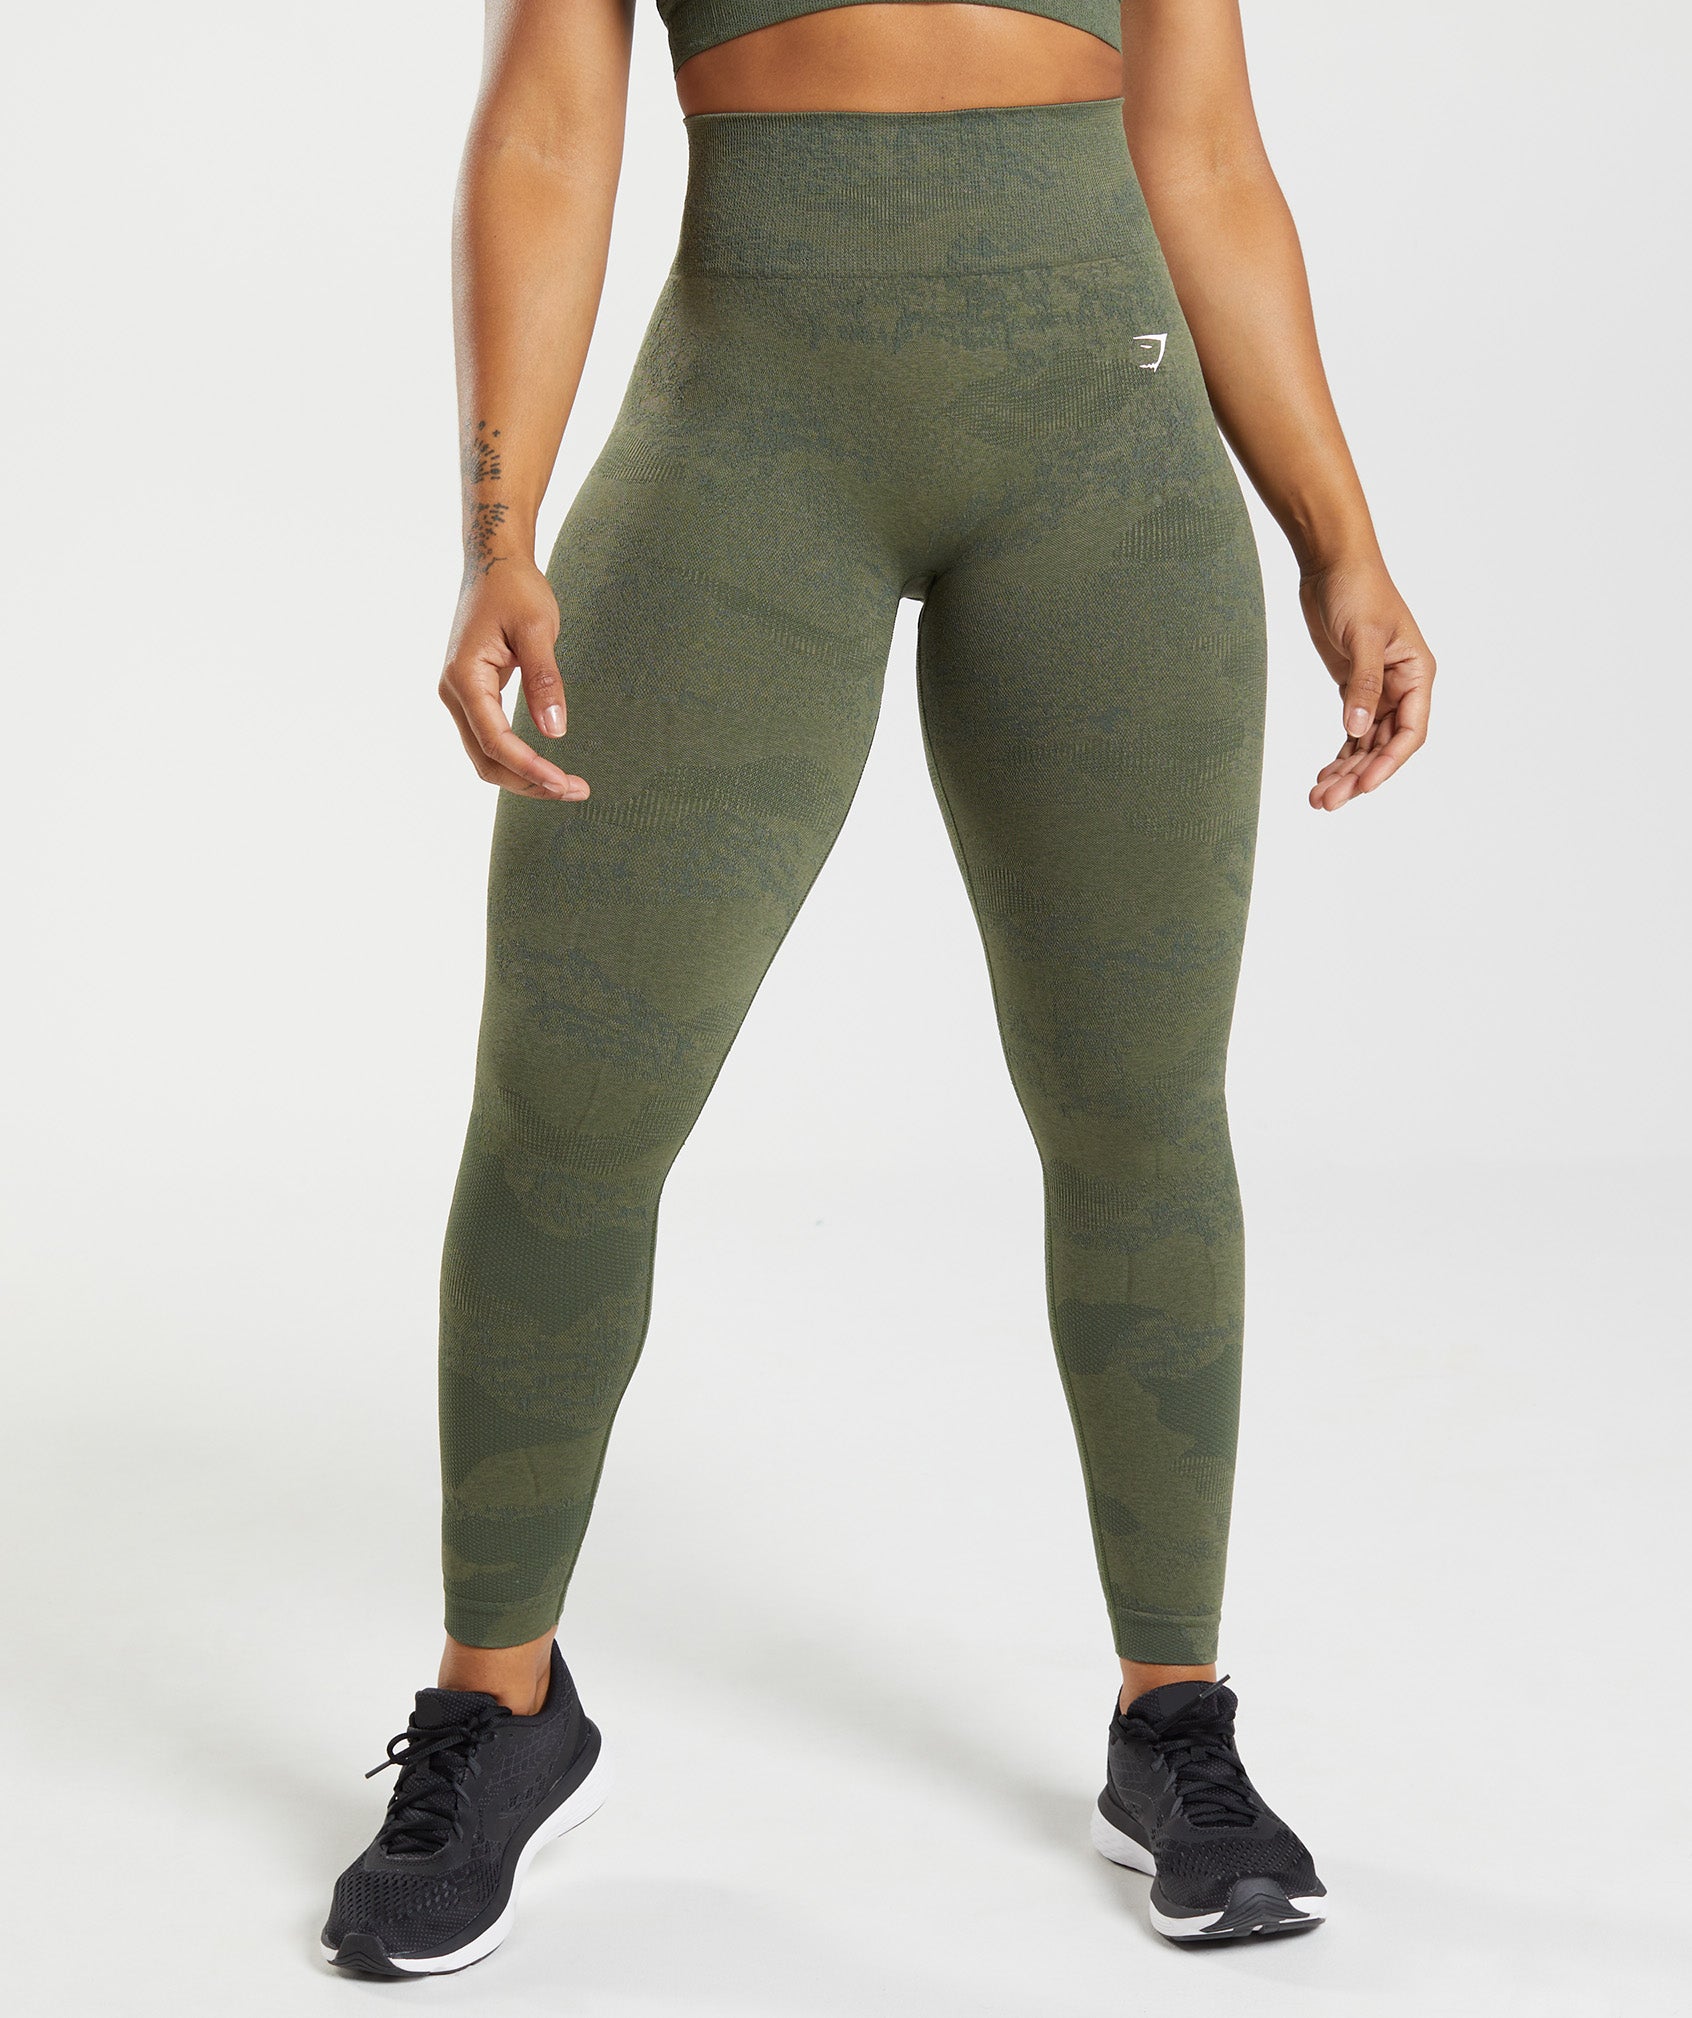 New Gymshark Adapt Camo Seamless Leggings Women's Olive Green Size